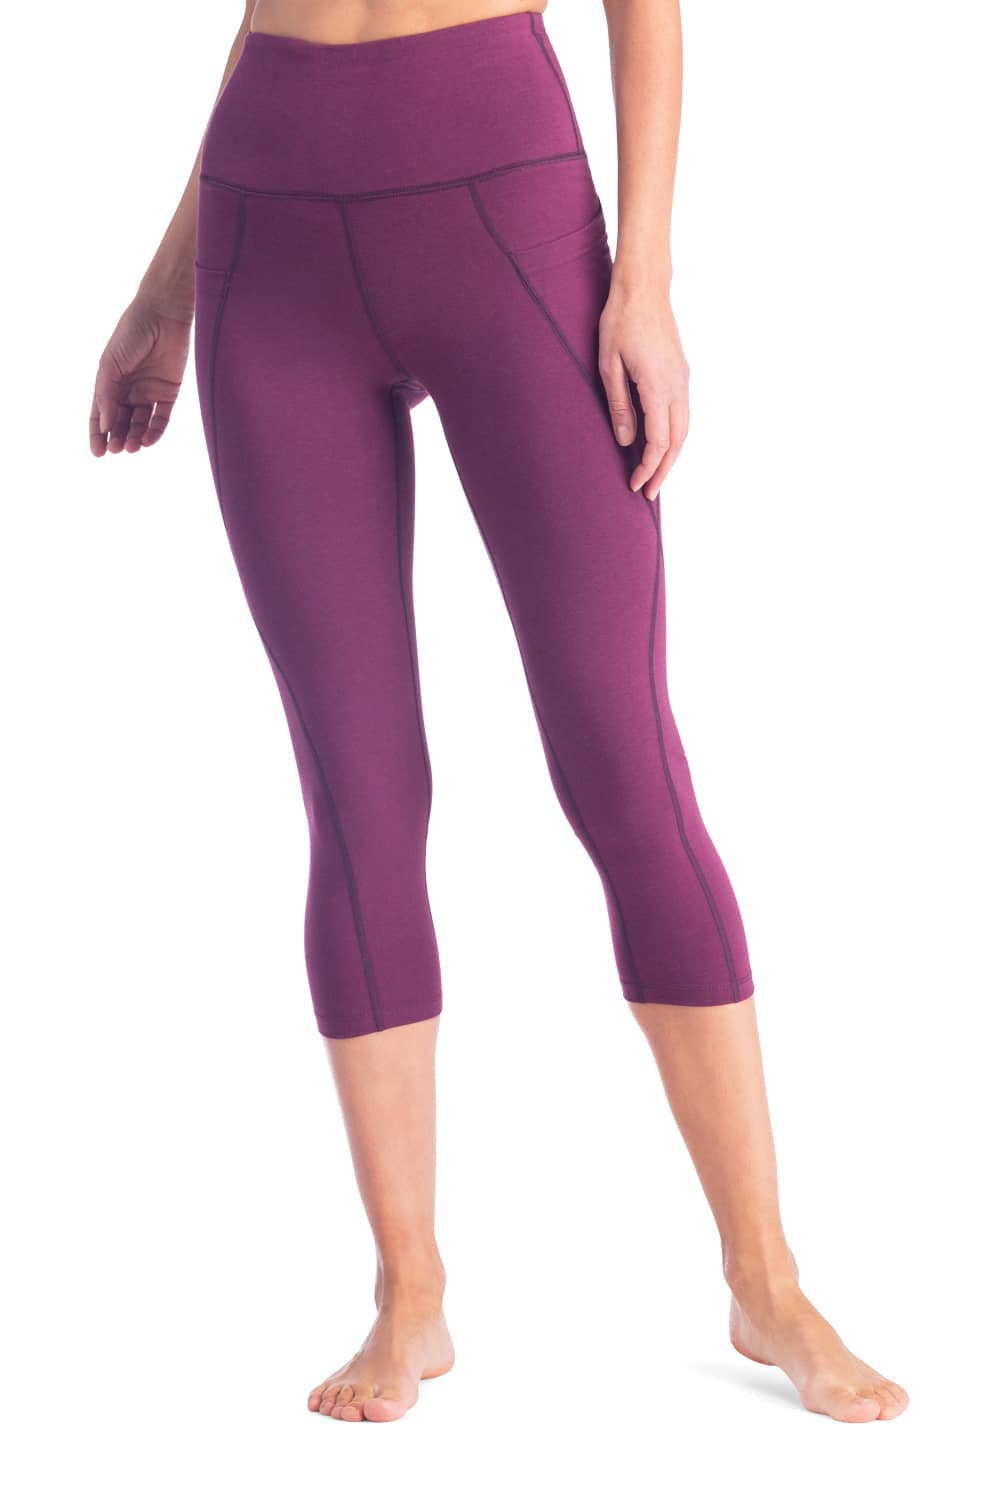 Comfy Leggings - Brushed Tummy Control 5 High Waist Capri & Biker Short  Leggings for Women - Violet Capri - S-M-L 